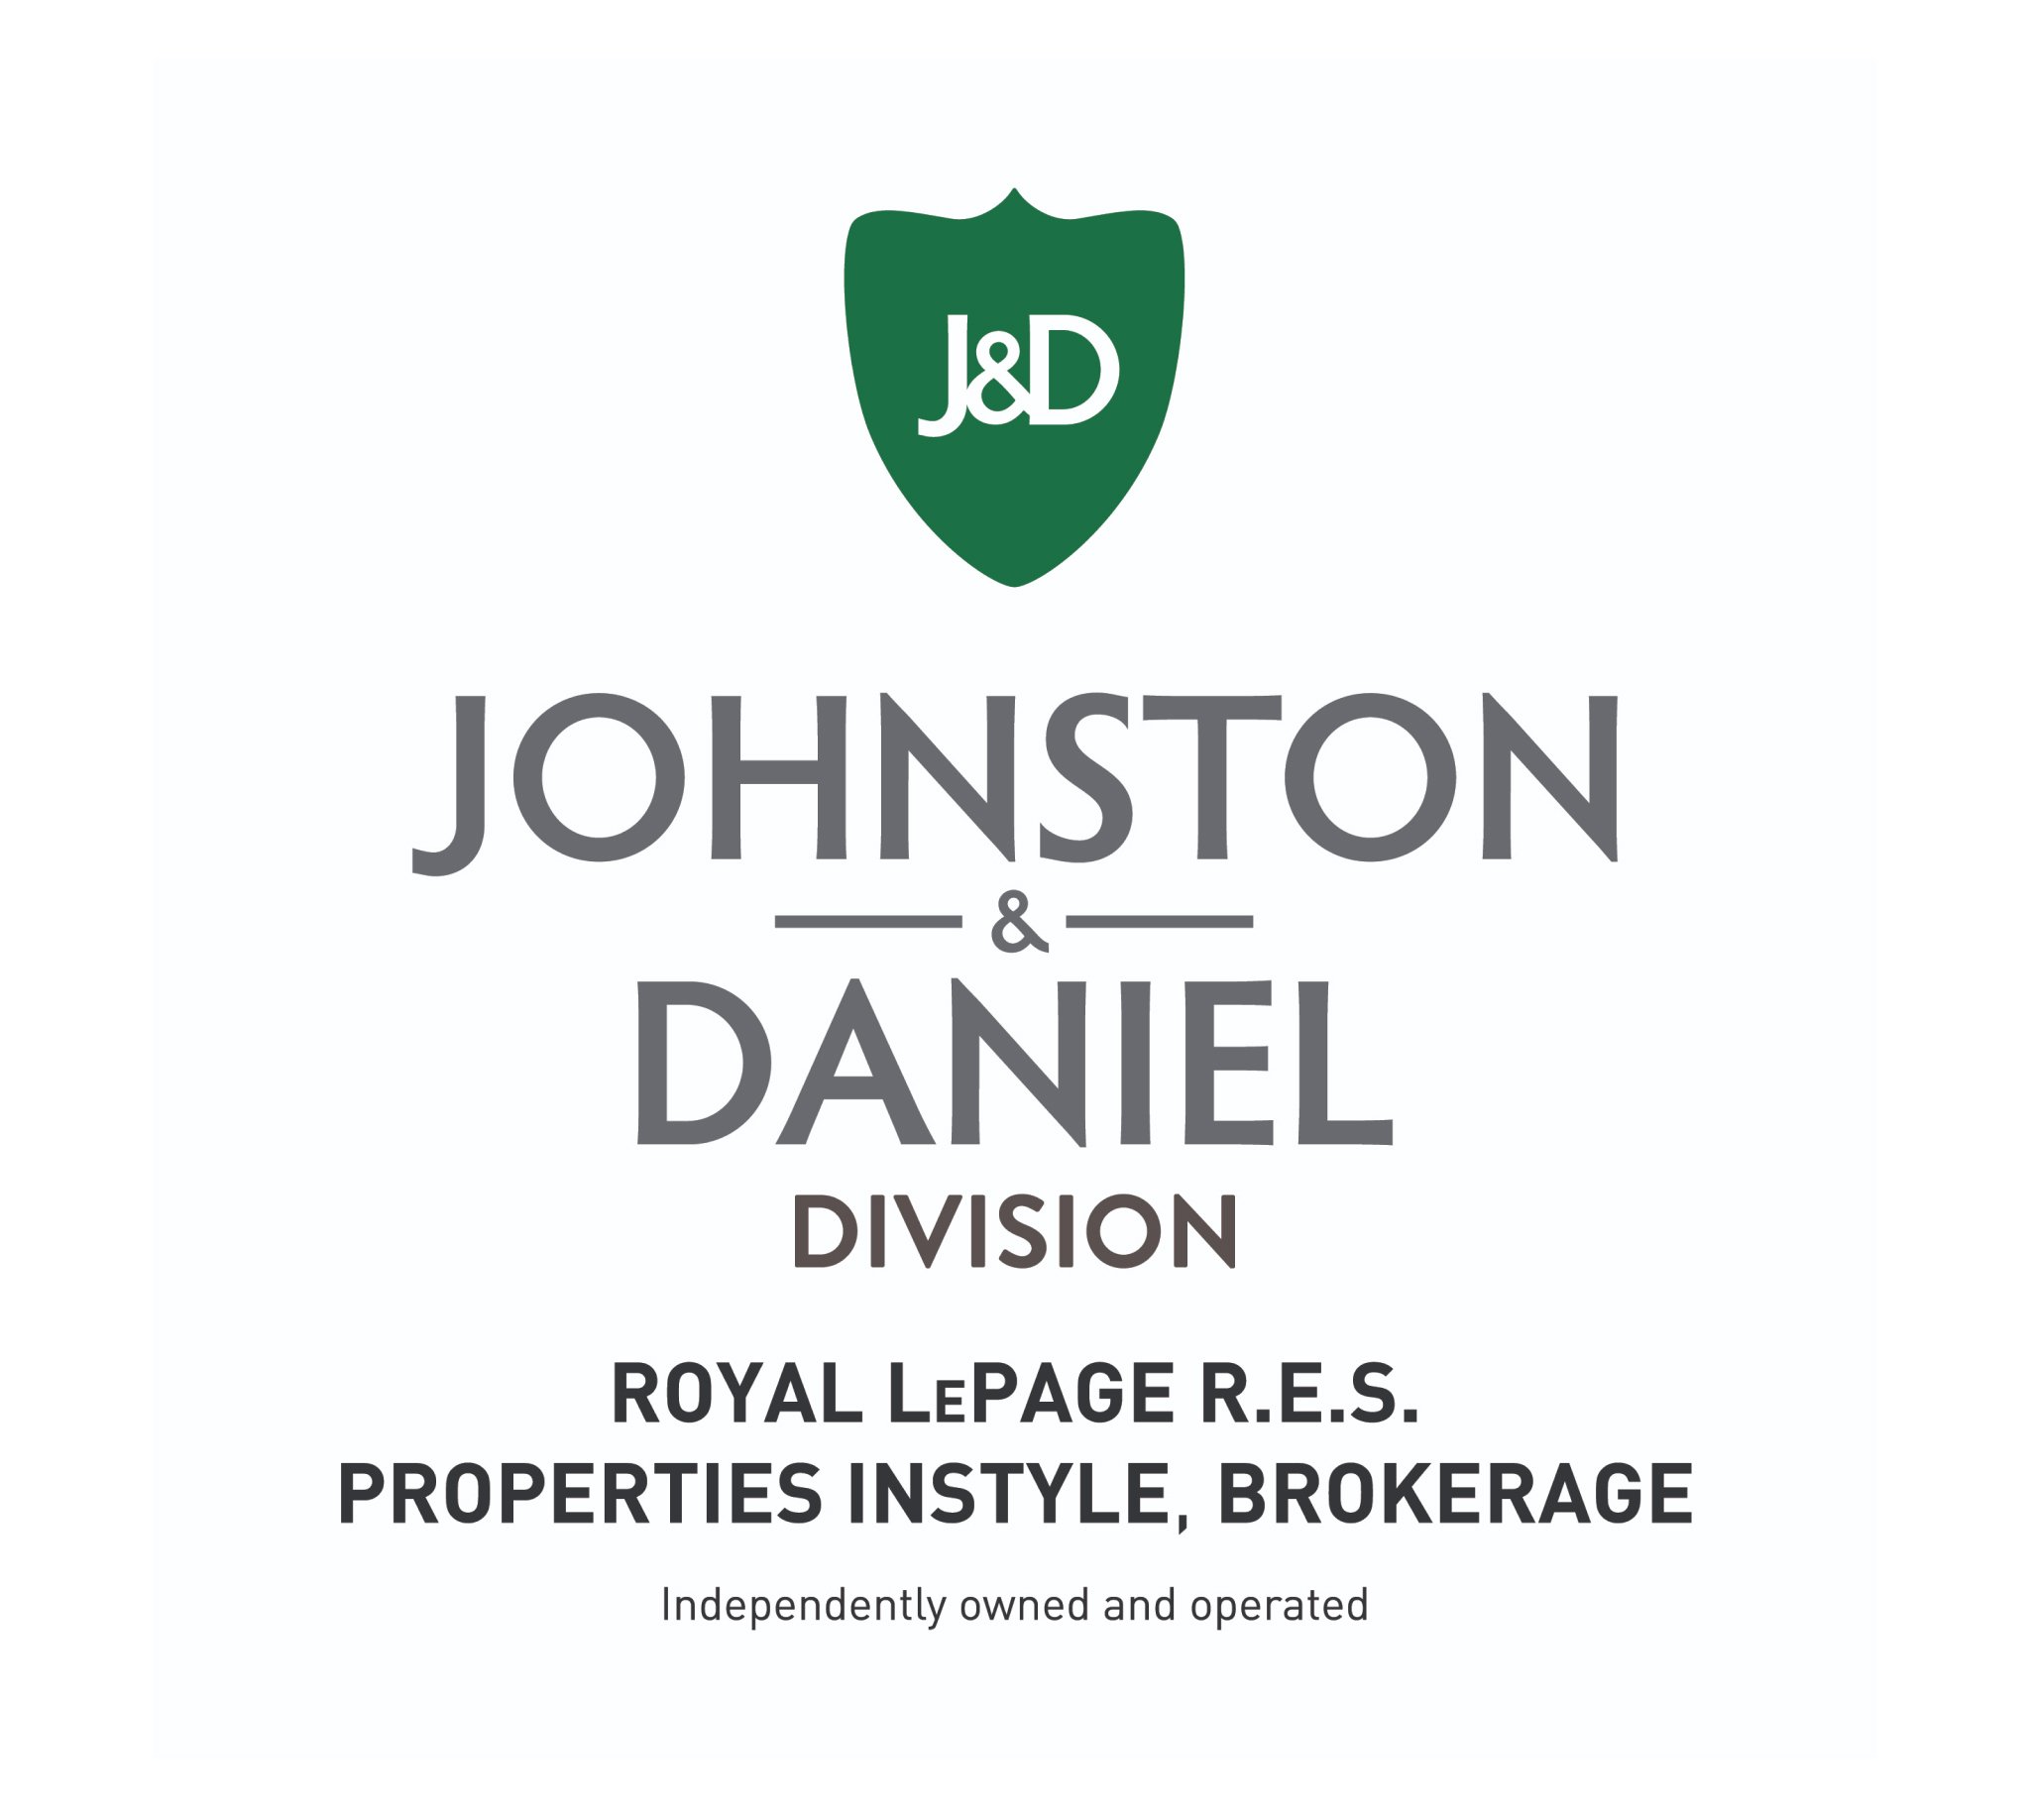 Johnston & Daniel Division